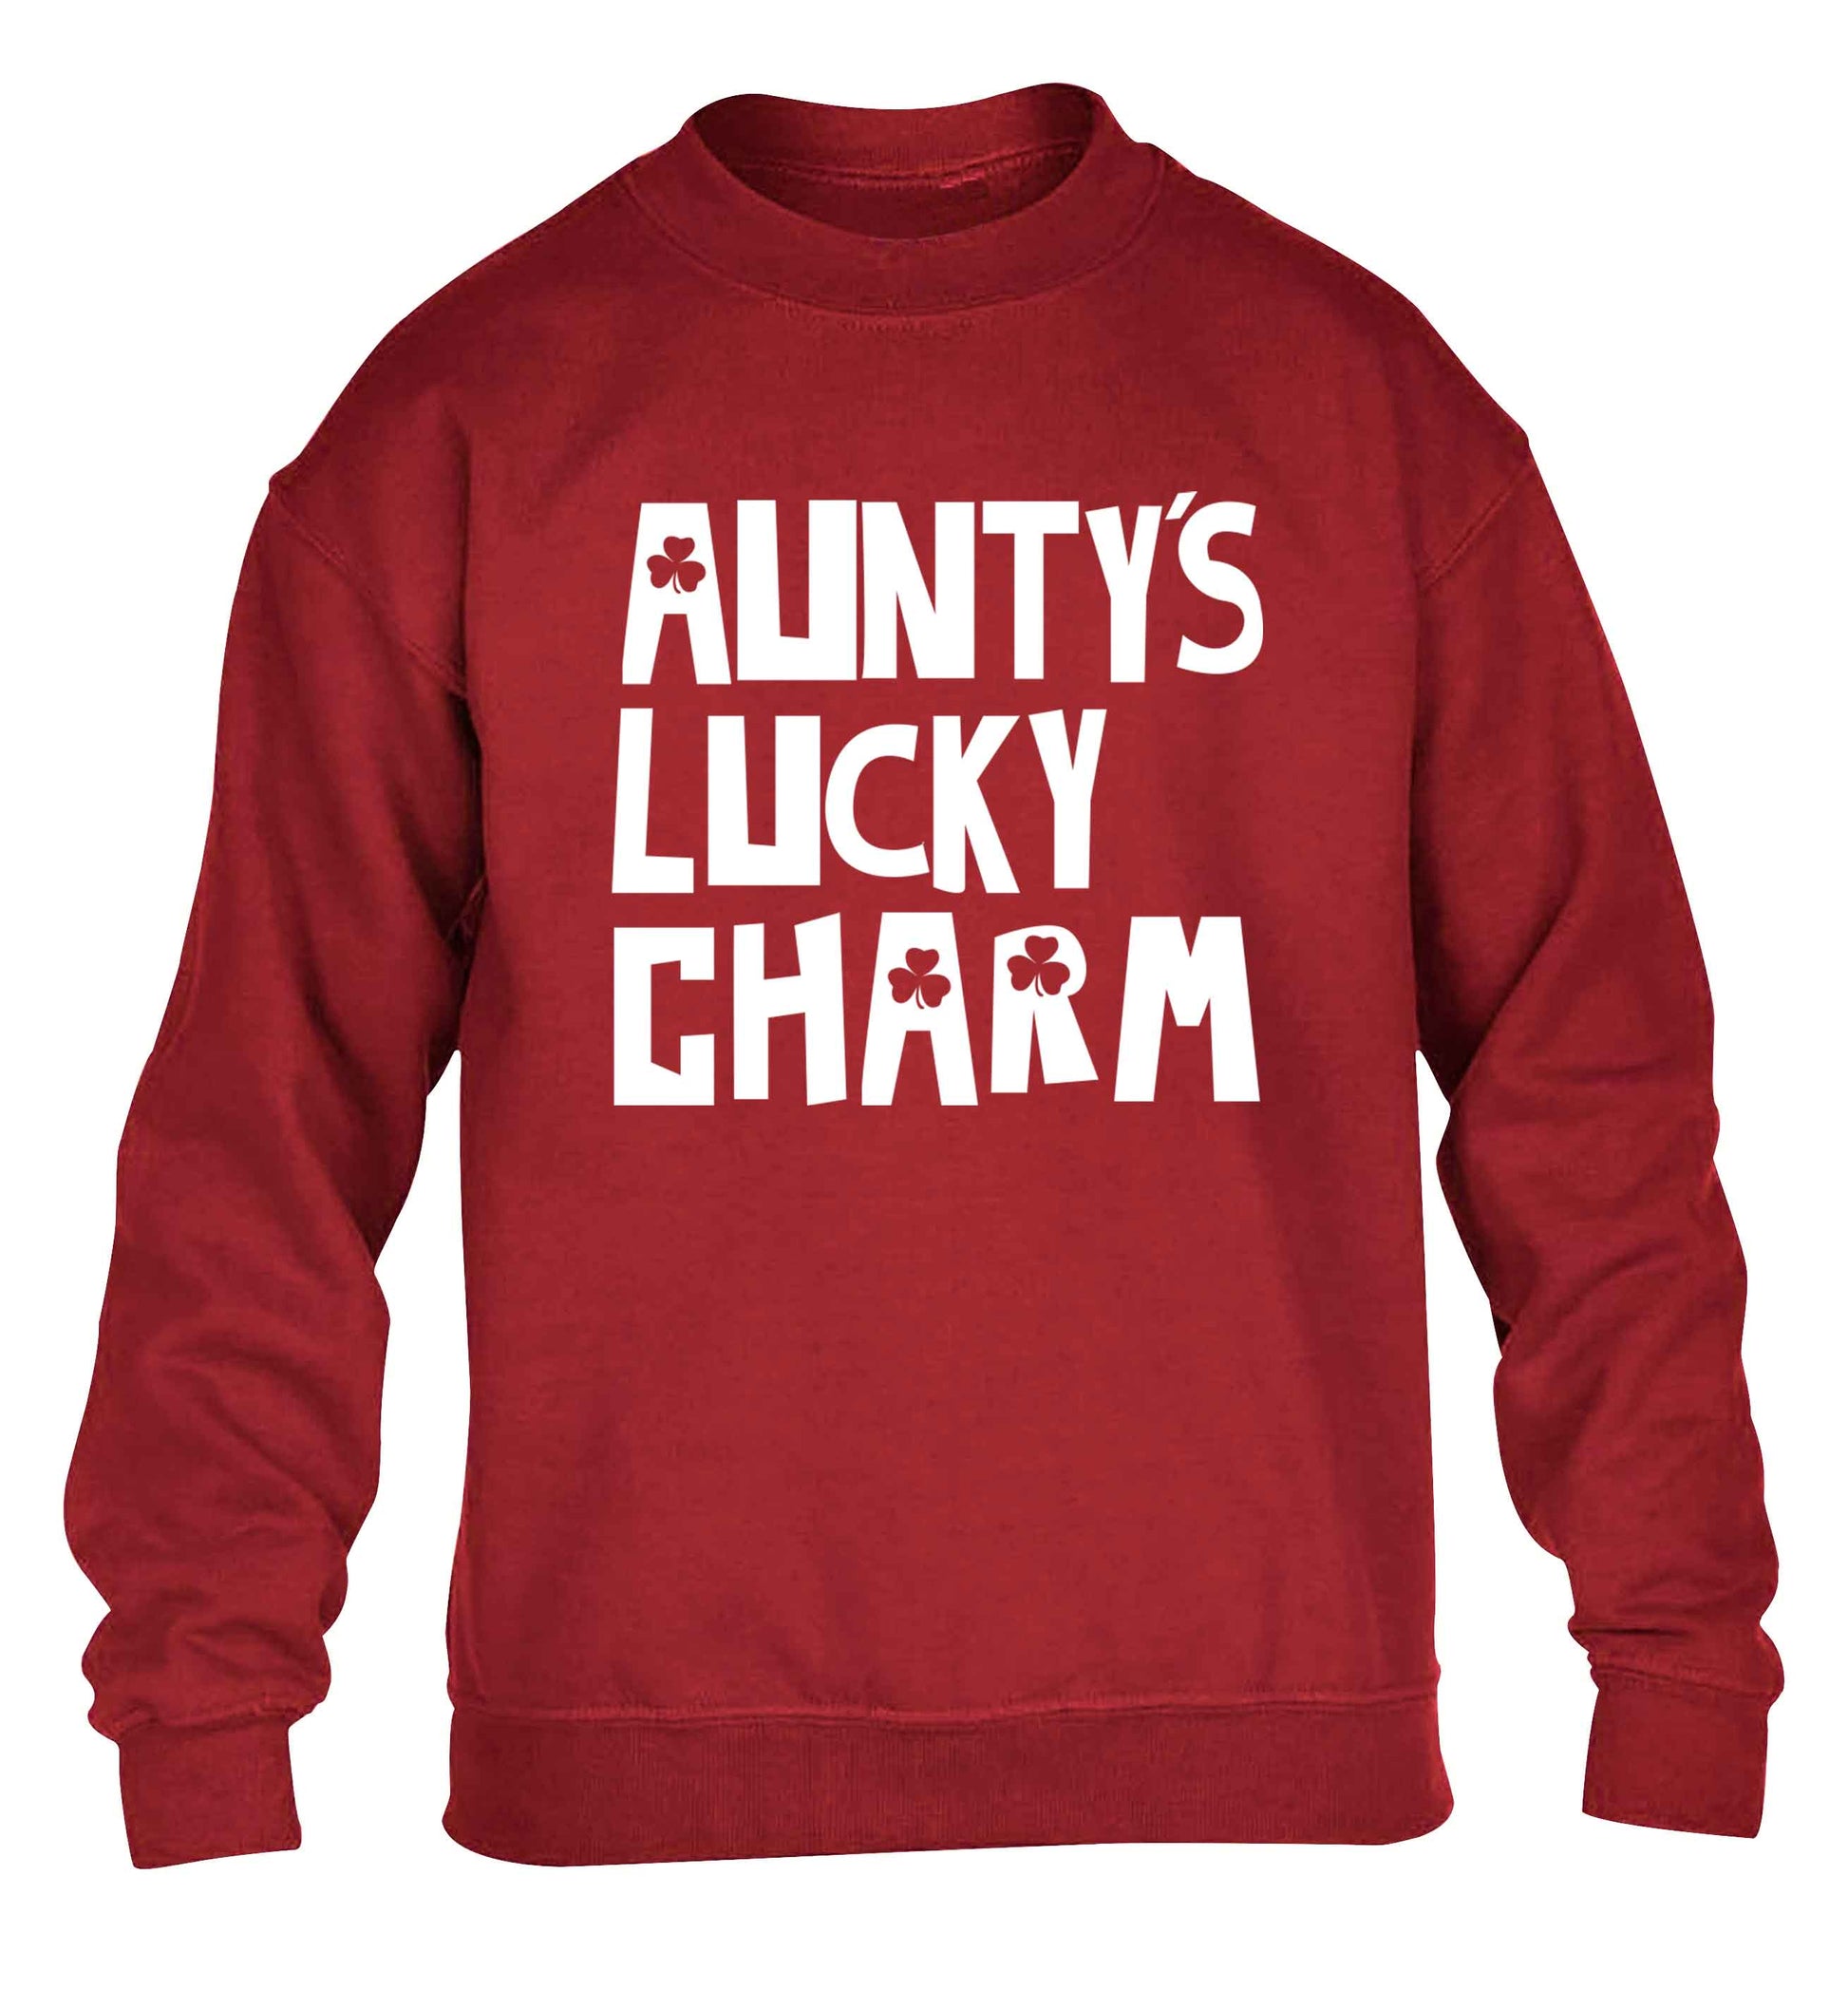 Aunty's lucky charm children's grey sweater 12-13 Years